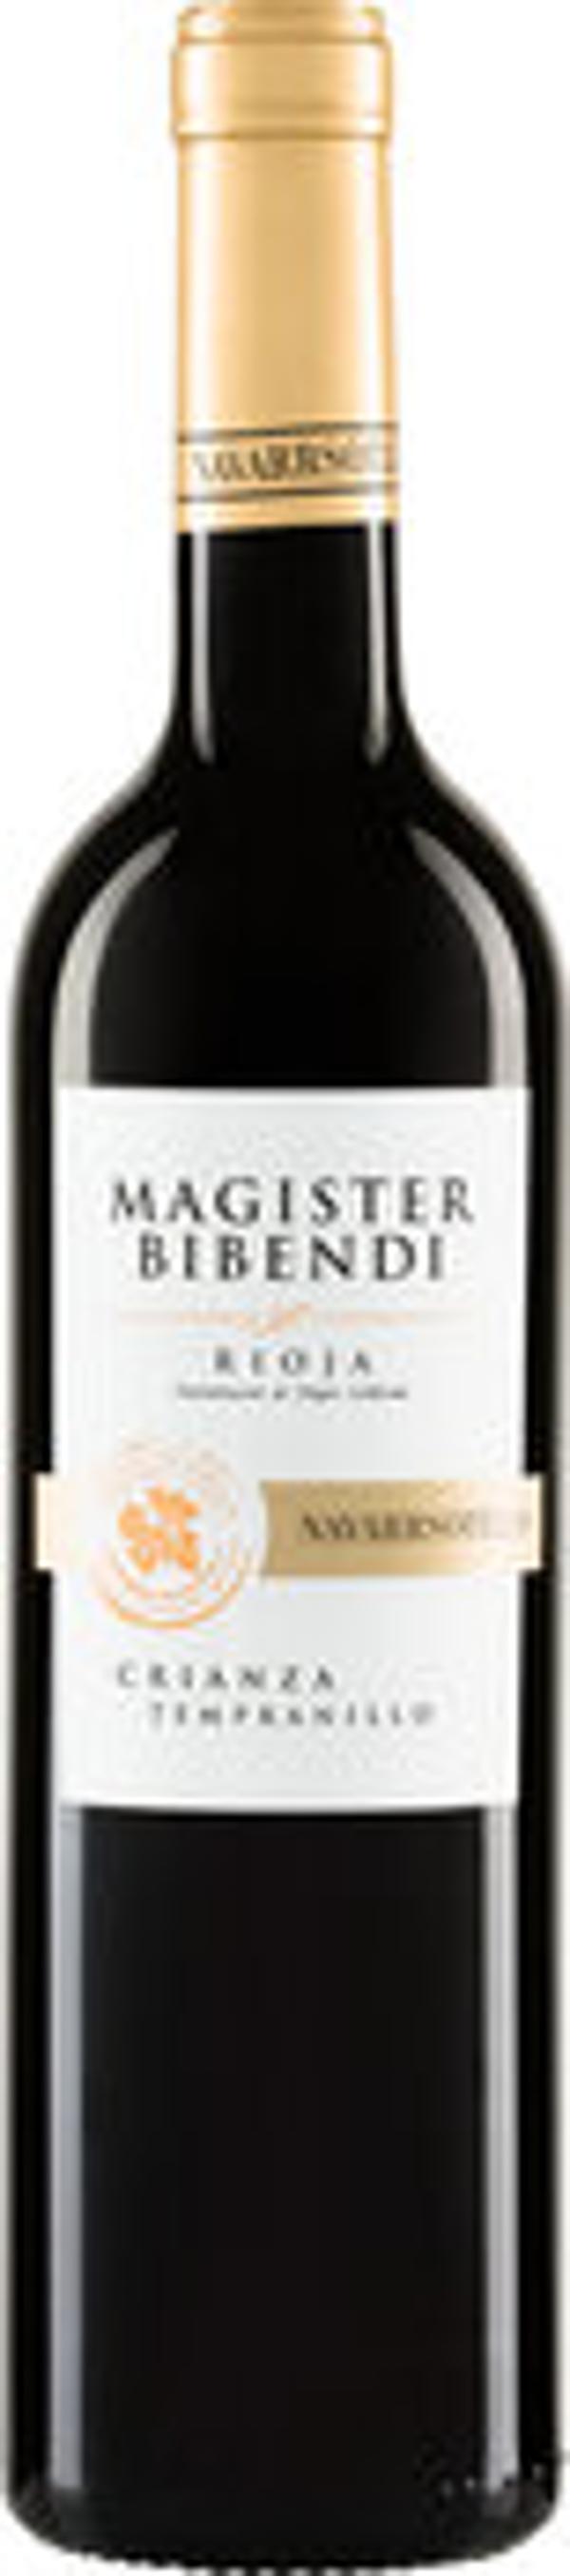 Produktfoto zu MAGISTER BIBENDI Crianza Rioja D.O.Ca. Navarrsotillo, trocken - 0,75l